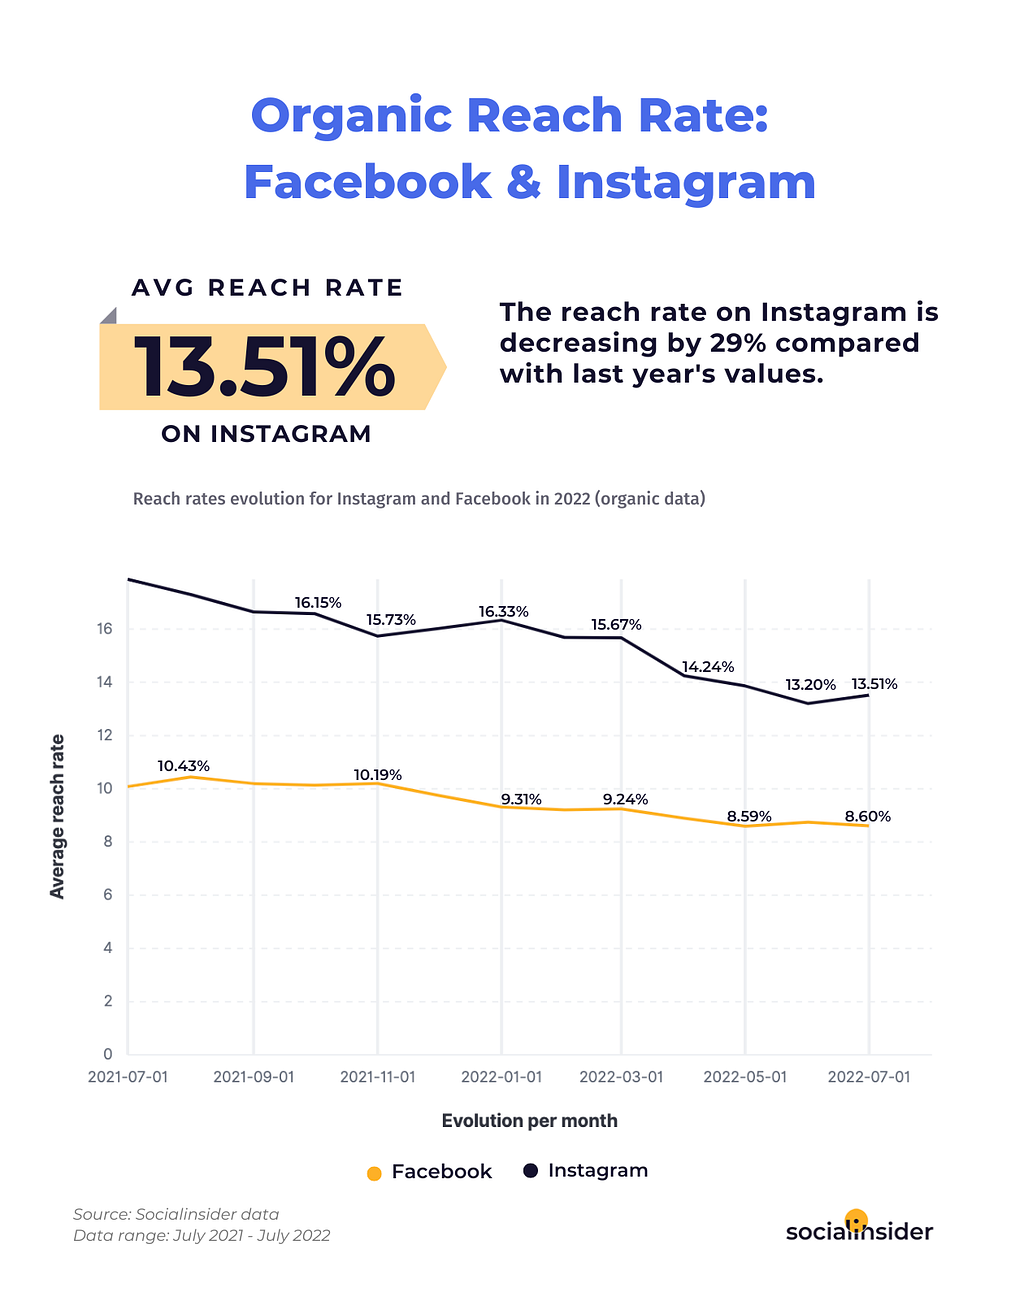 Facebook's and Instagram's organic reach rates are decreasing.